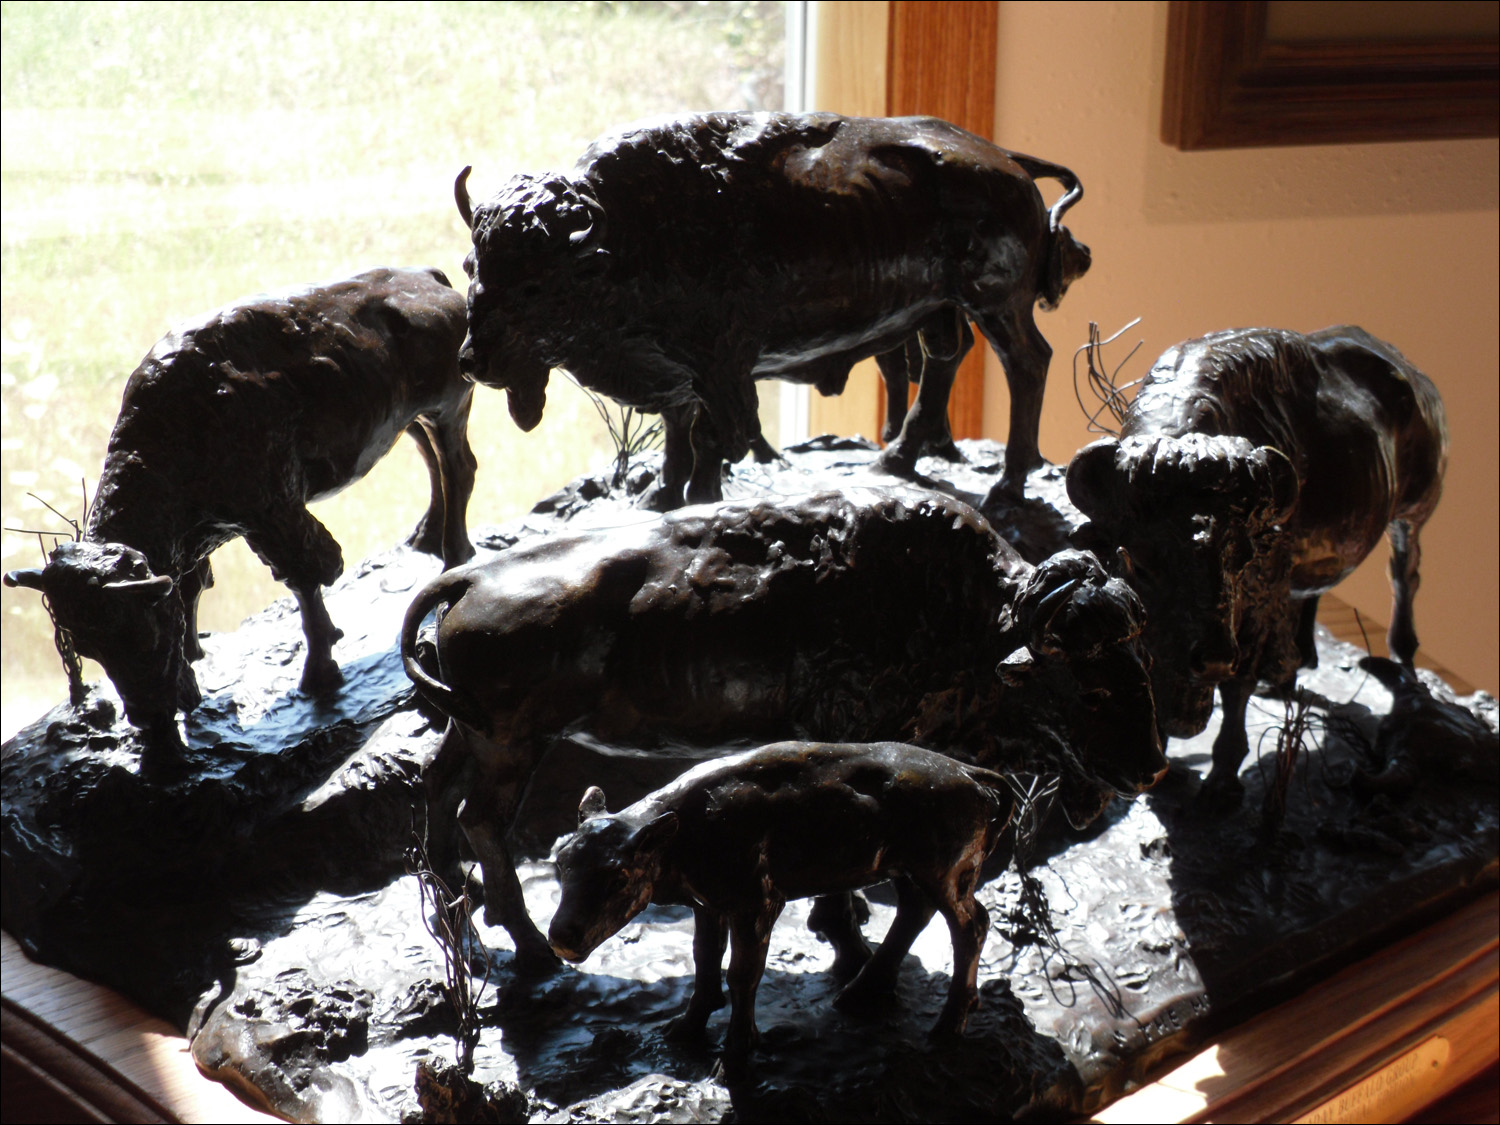 Fort Benton, MT Agriculture Museum-miniature of life-size Bison exhibit